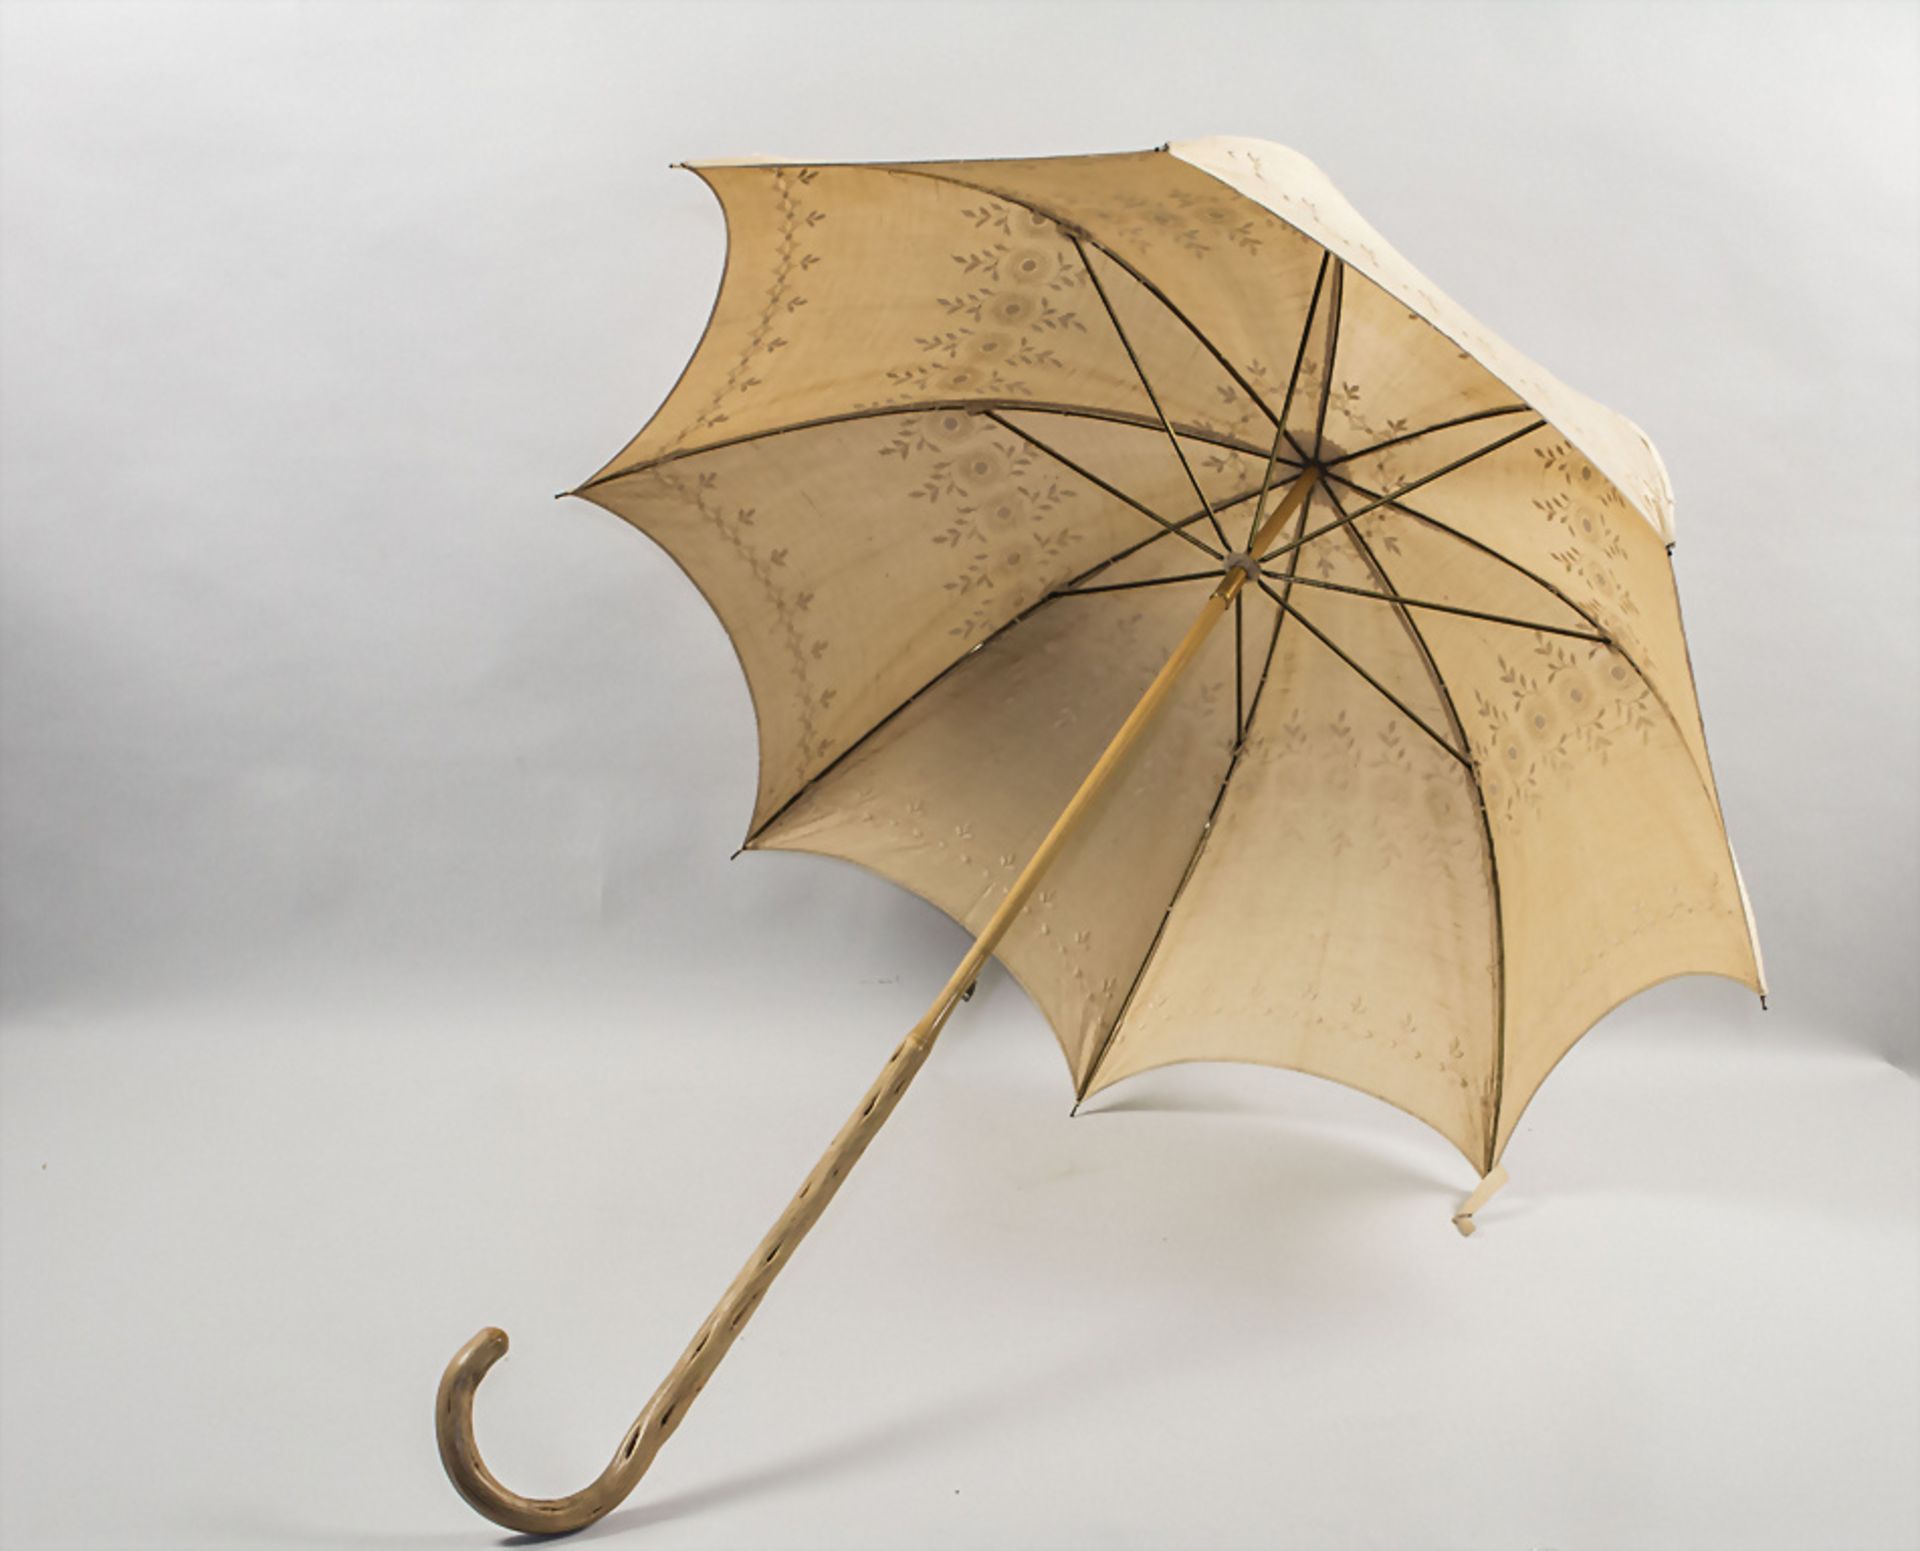 Sonnenschirm / A parasol, Ende 19. Jh. - Bild 2 aus 4